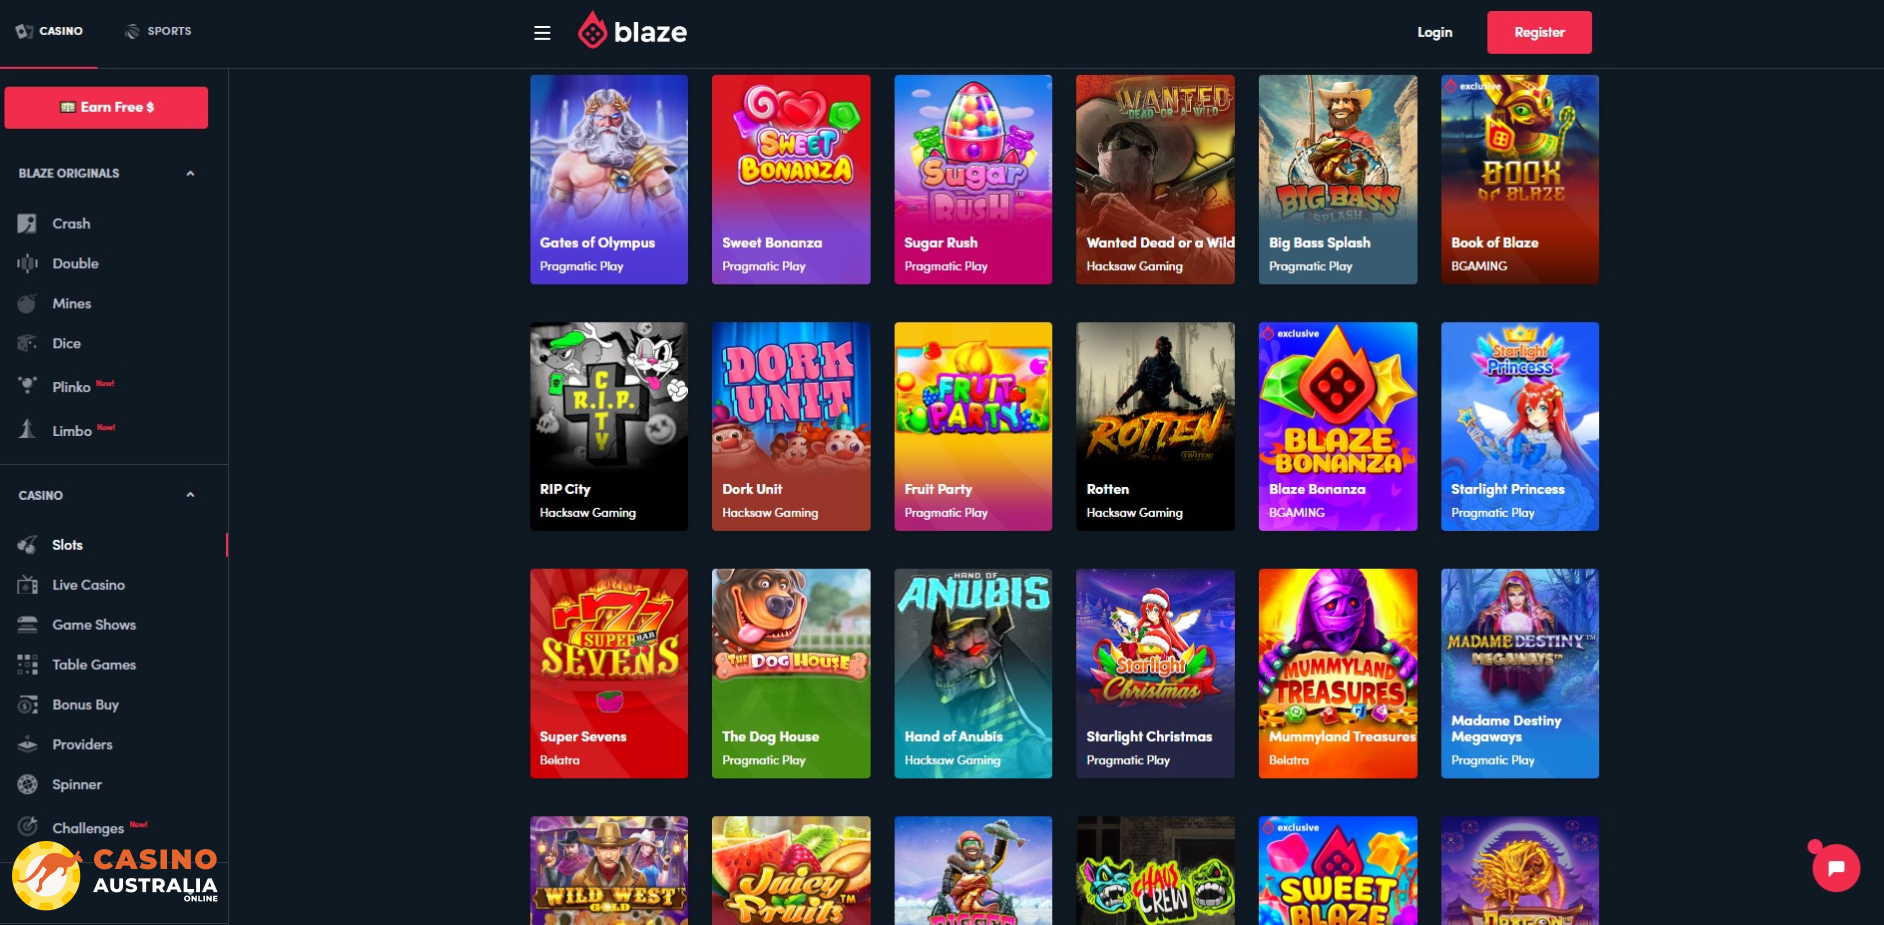 Blaze Casino Games Australia